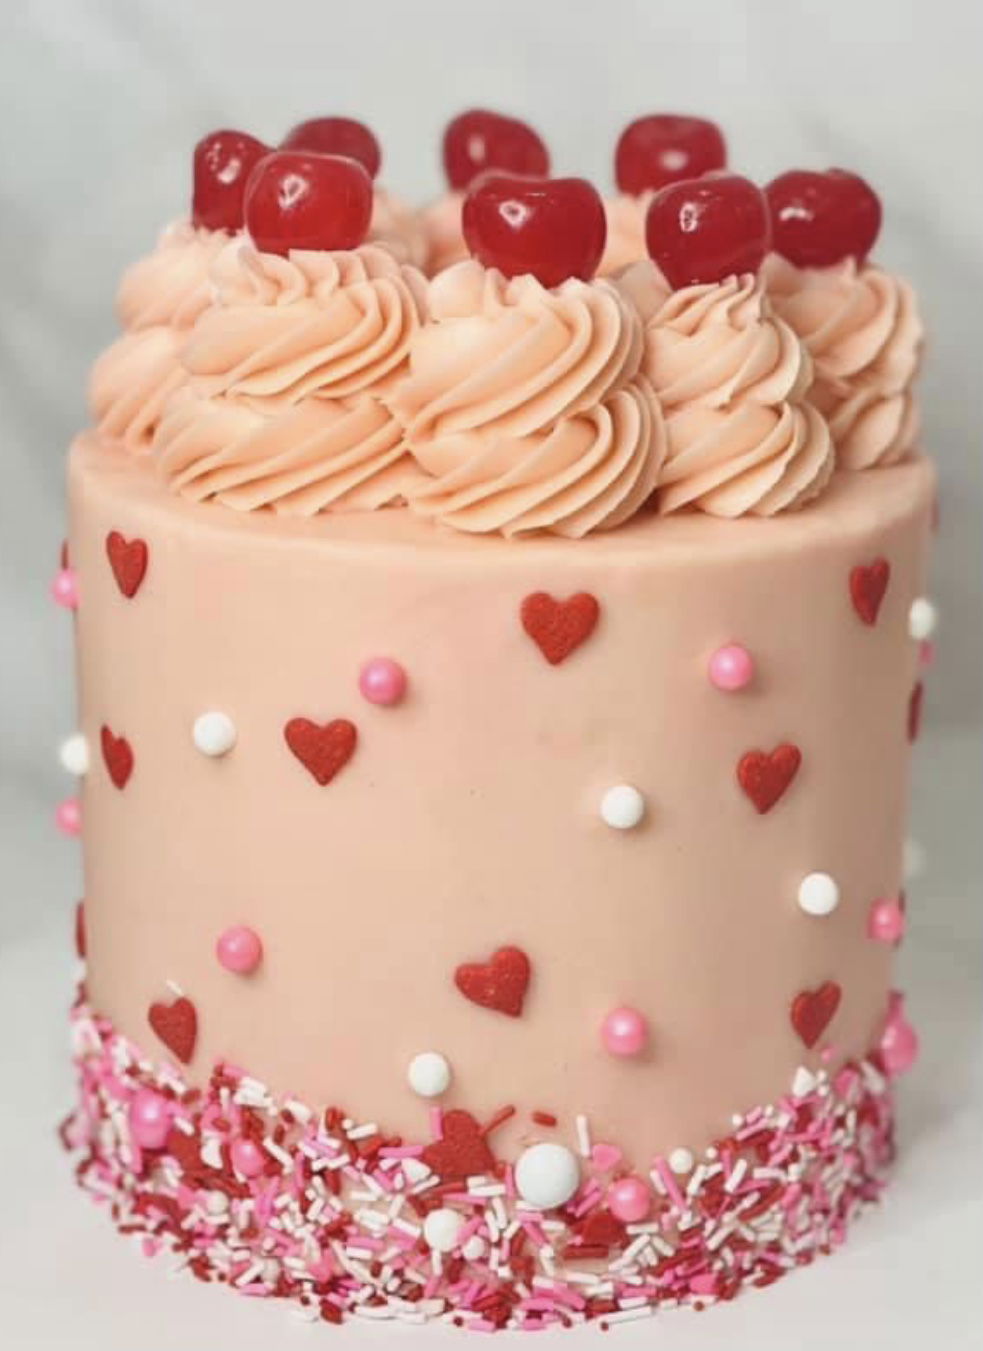 3 Layer Vanilla Valentines Cake With Buttercream Frosting And Maraschino Cherries